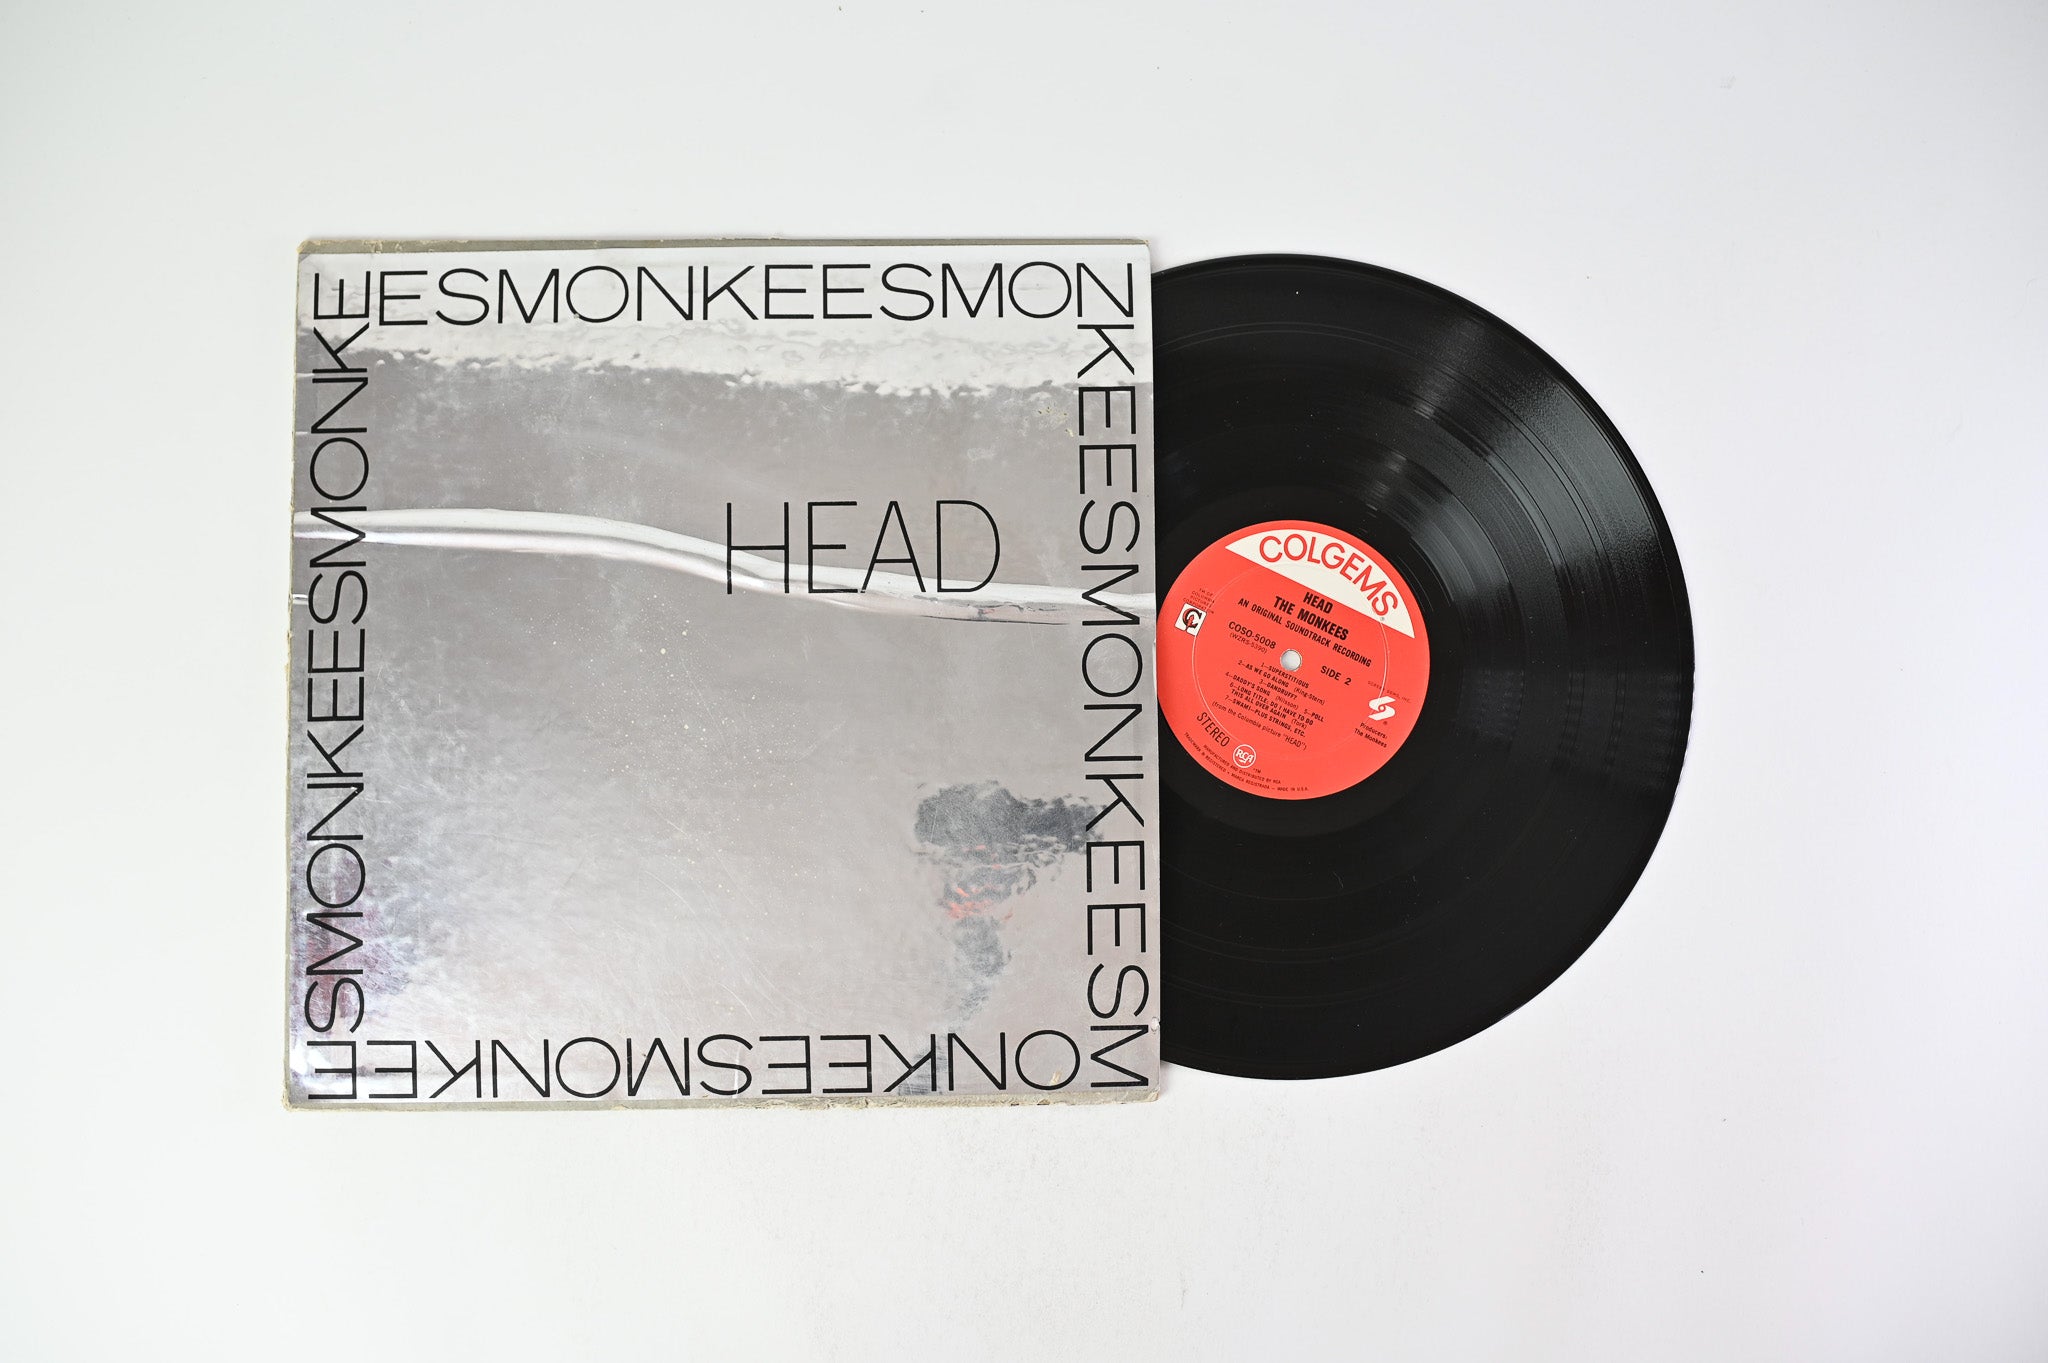 The Monkees - Head on Colgems